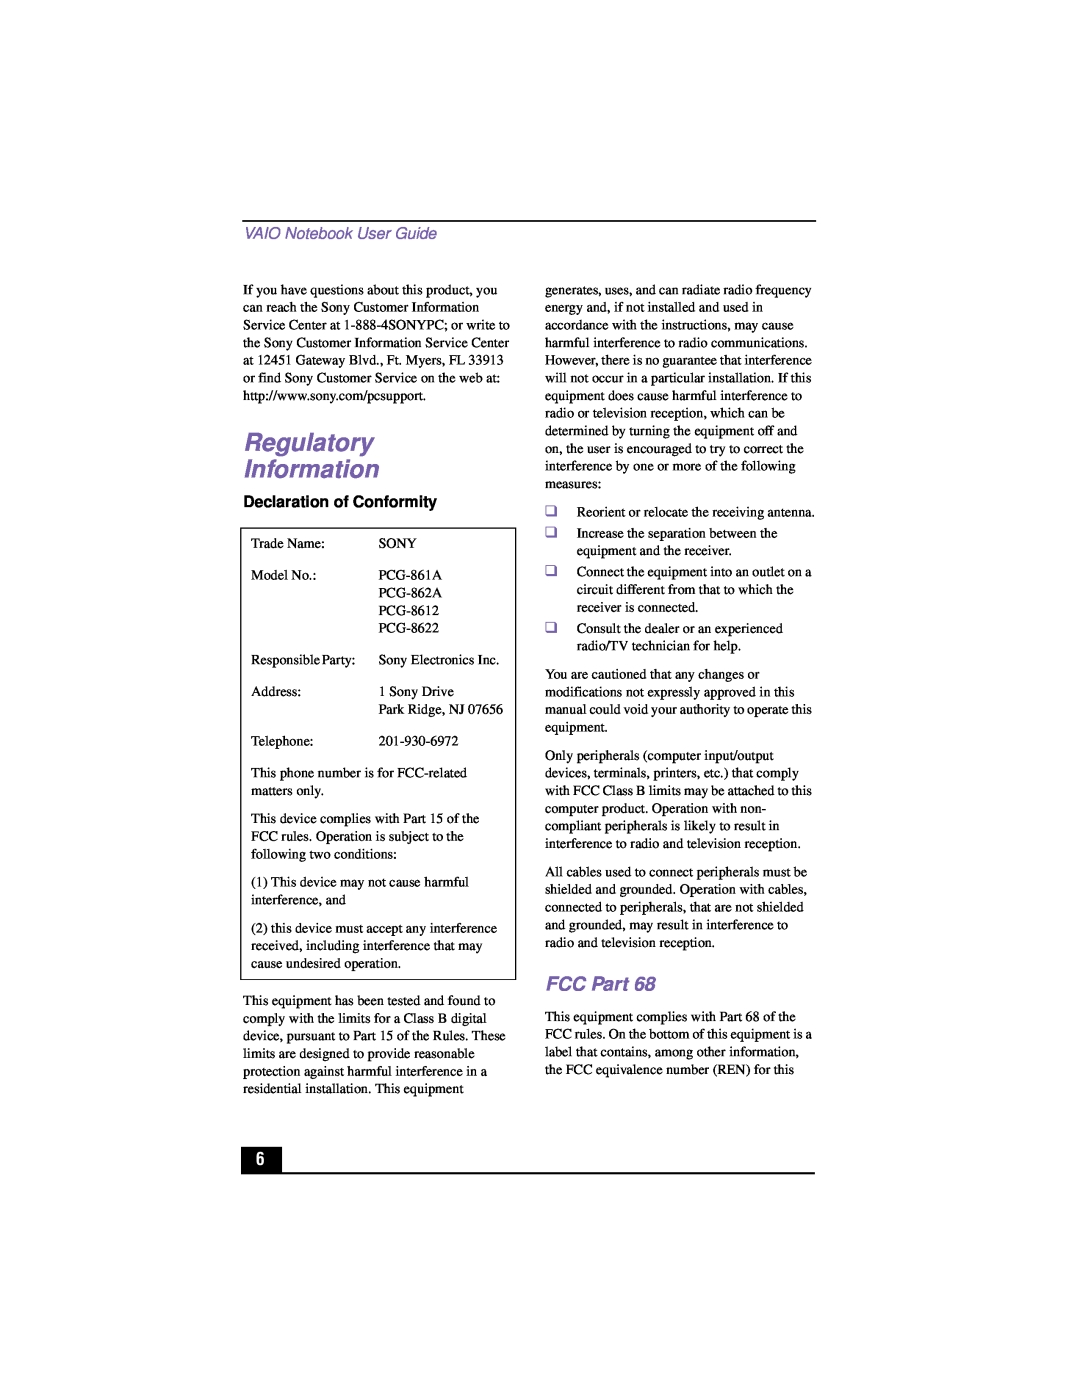 Sony PCG-XG500K, PCG-XG700K manual Regulatory Information, FCC Part, VAIO Notebook User Guide, Declaration of Conformity 